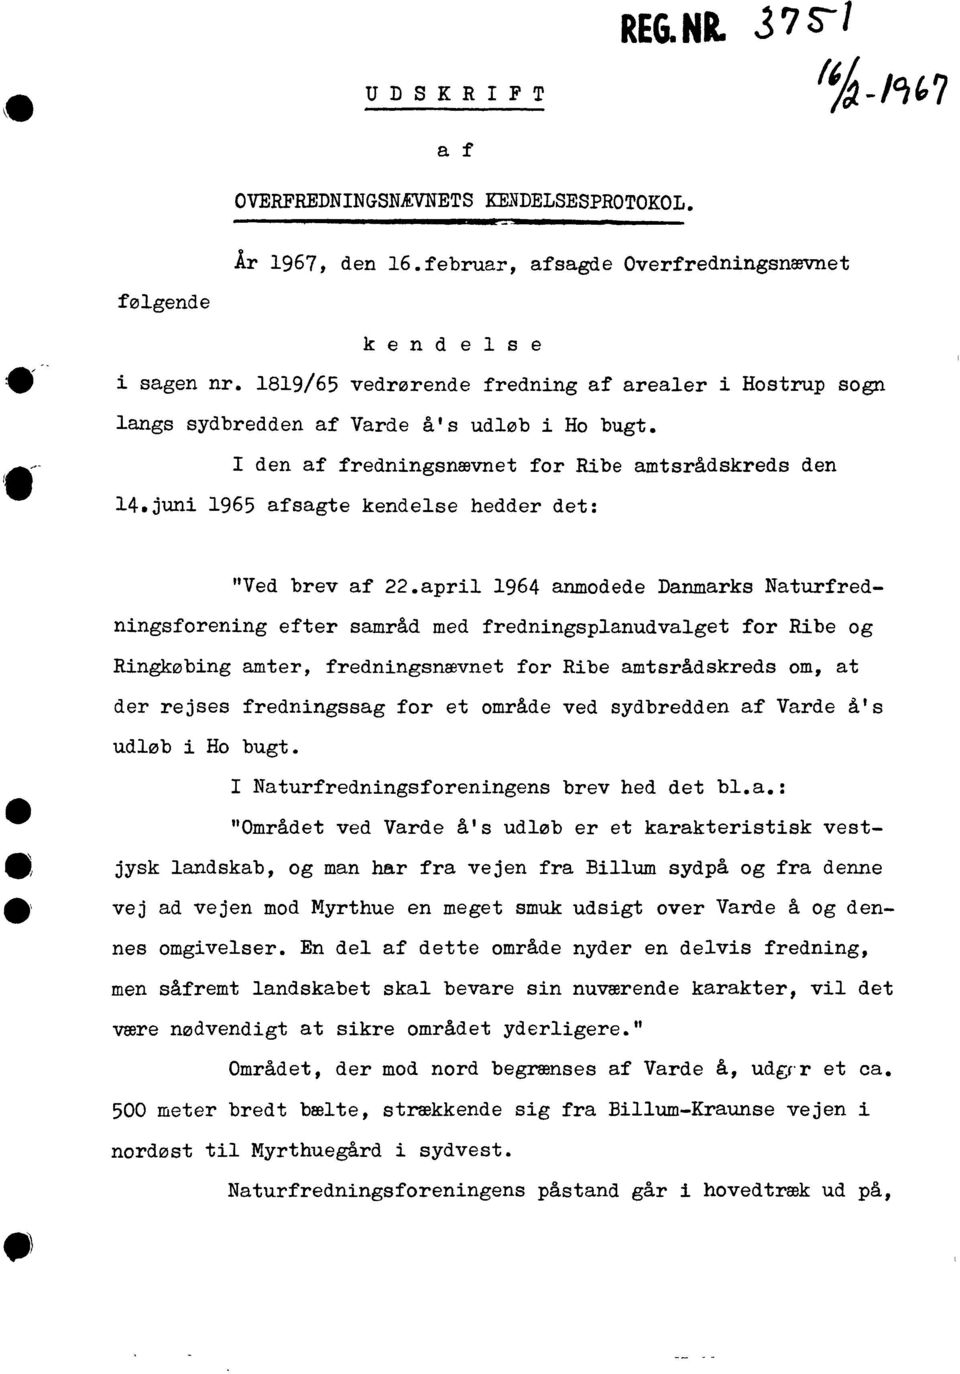 april 1964 anmodd Danmarks Naturfrdningsforning ftr samråd md frdningsplanudvalgt for Rib og Ringkøbing amtr, frdningsnævnt for Rib amtsrådskrds om, at dr rjss frdningssag for t områd vd sydbrddn af